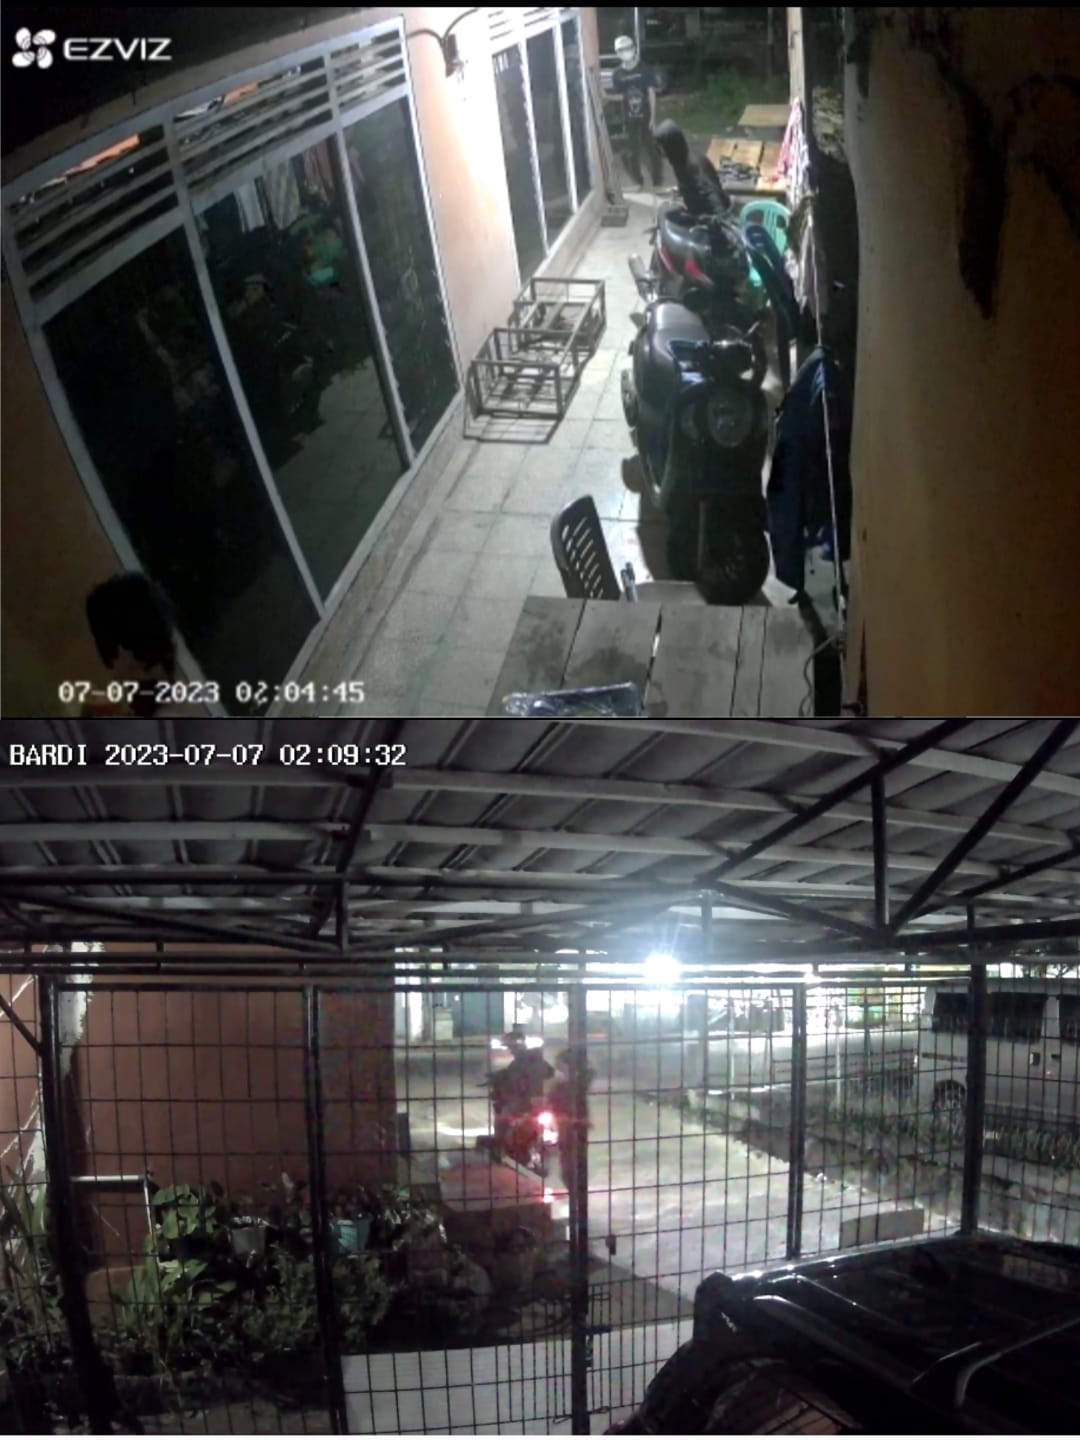  Motor Penjual Tahu di Kota Bengkulu Raib, Pelaku Ternyata Masih Remaja, Aksinya Terekam CCTV